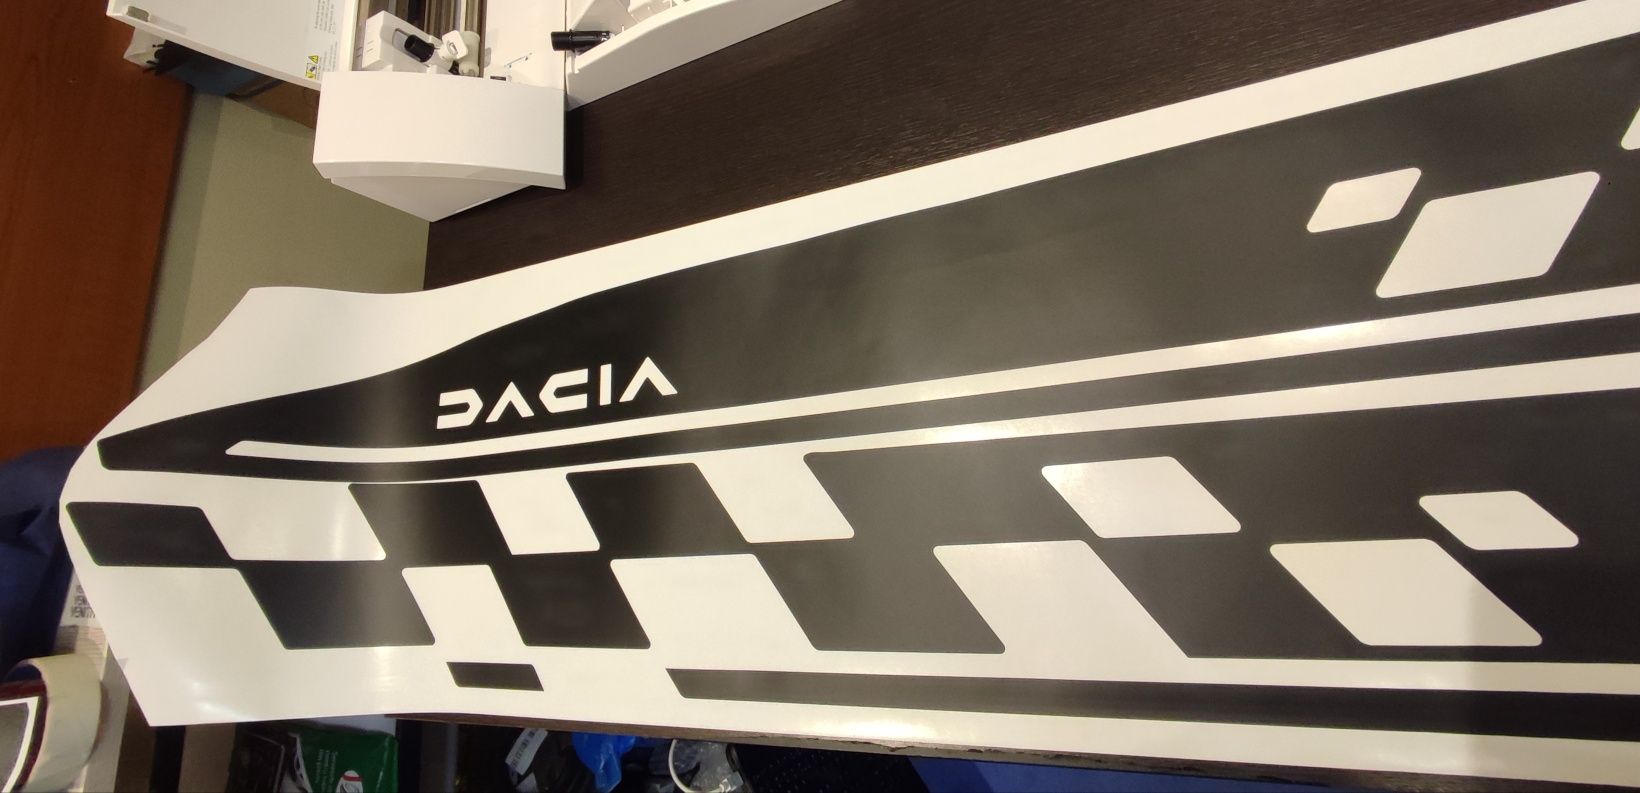 Linii sport/bandouri autocolant gama Dacia Logan/MCV/Sandero/Duster